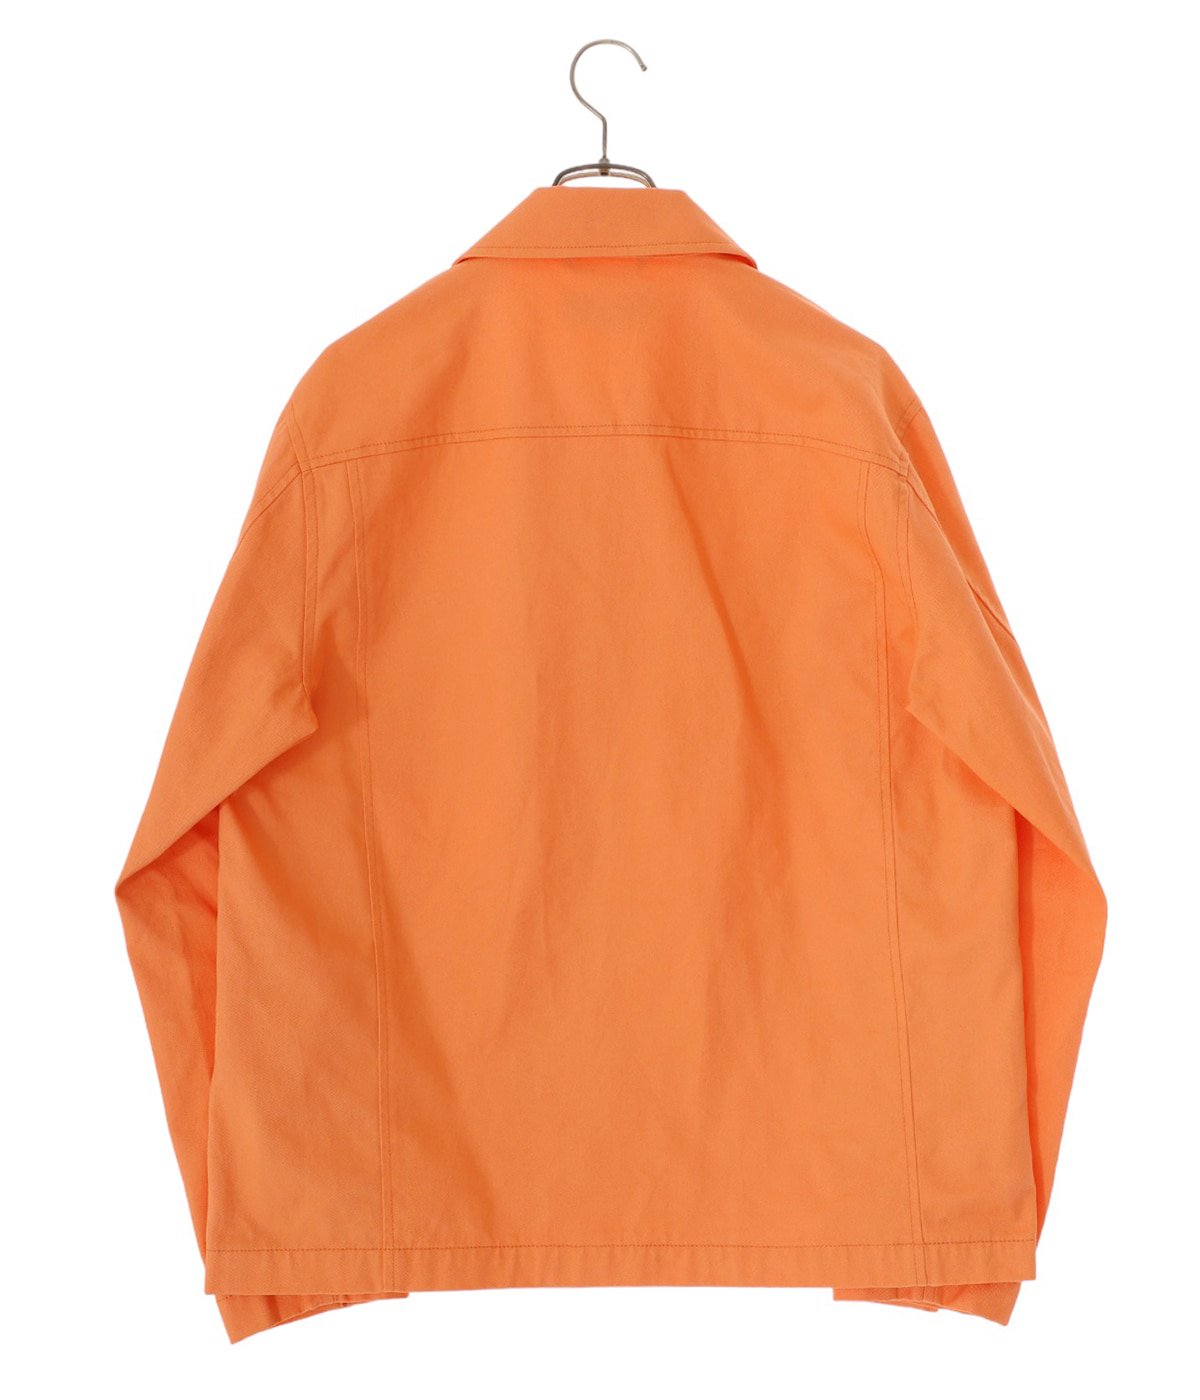 売り販促品 値下 BoTT 23AW cotton field jacket | sse.lodz.pl